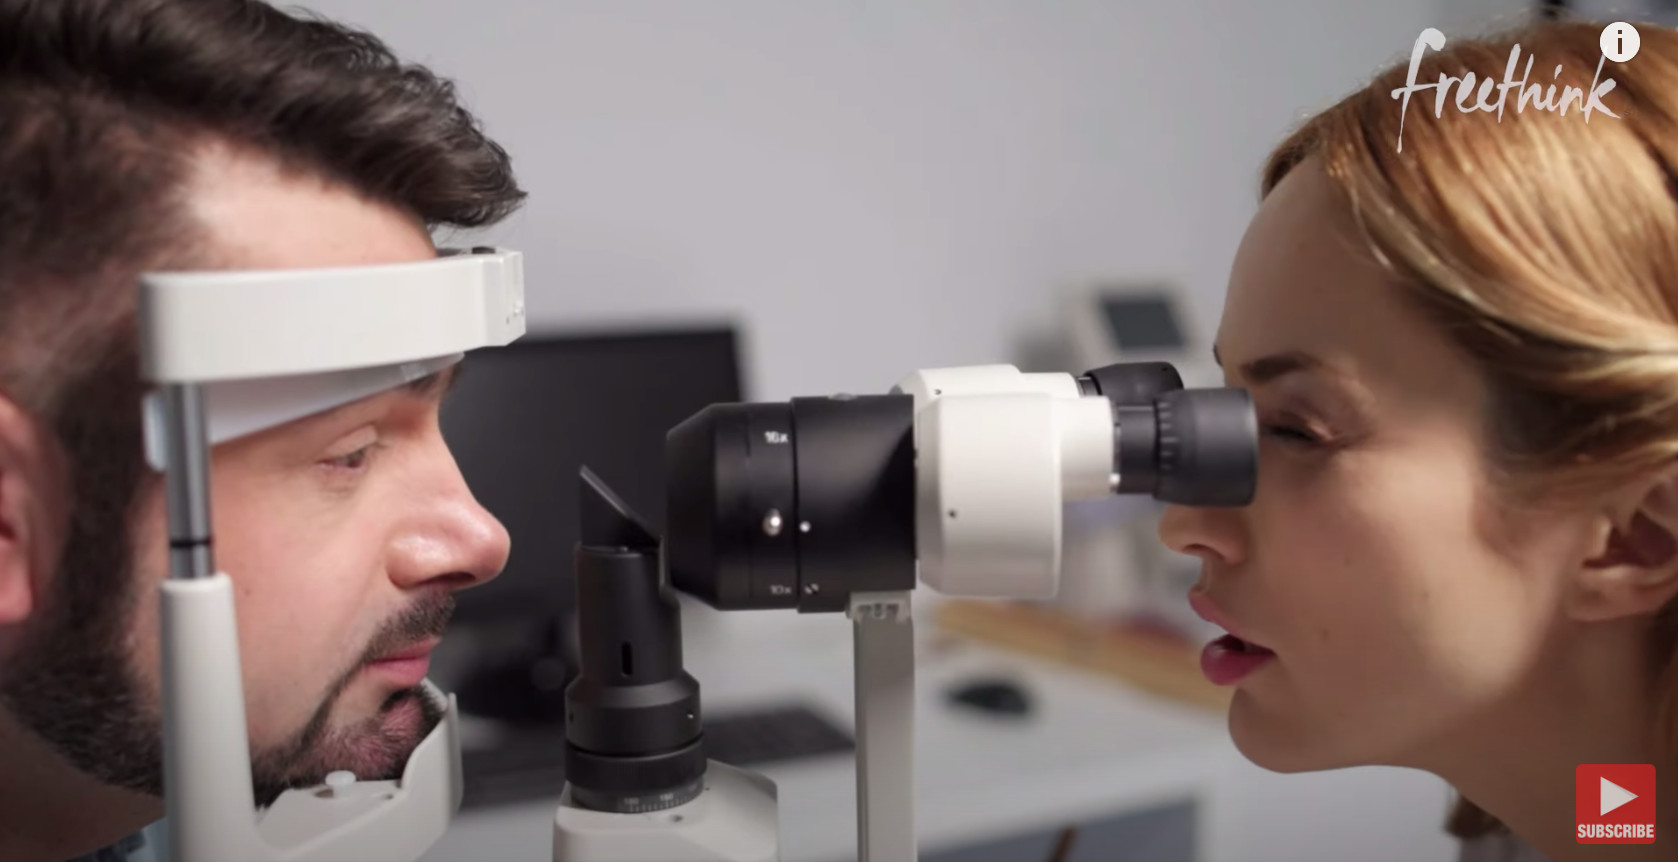 An optometrist conducts an eye exam on a man